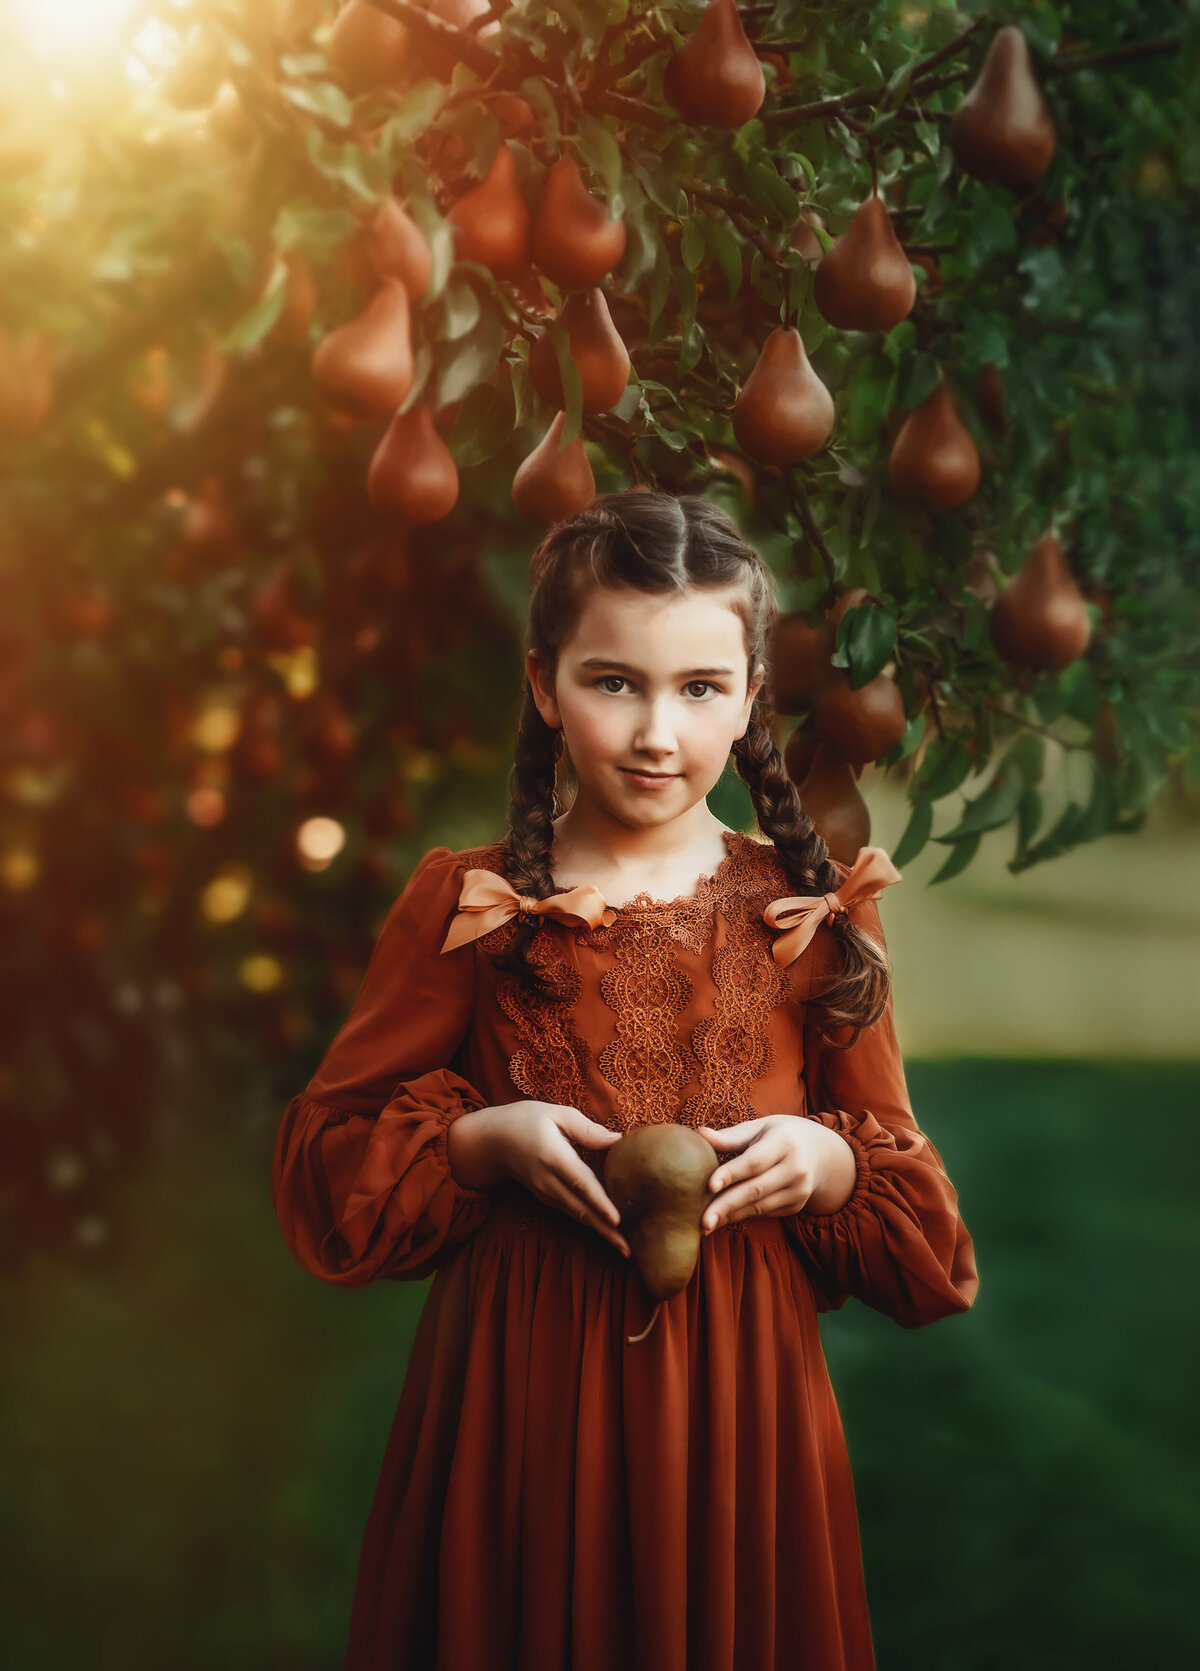 Girl-wearing-vintage-dress-in-apple-orchard